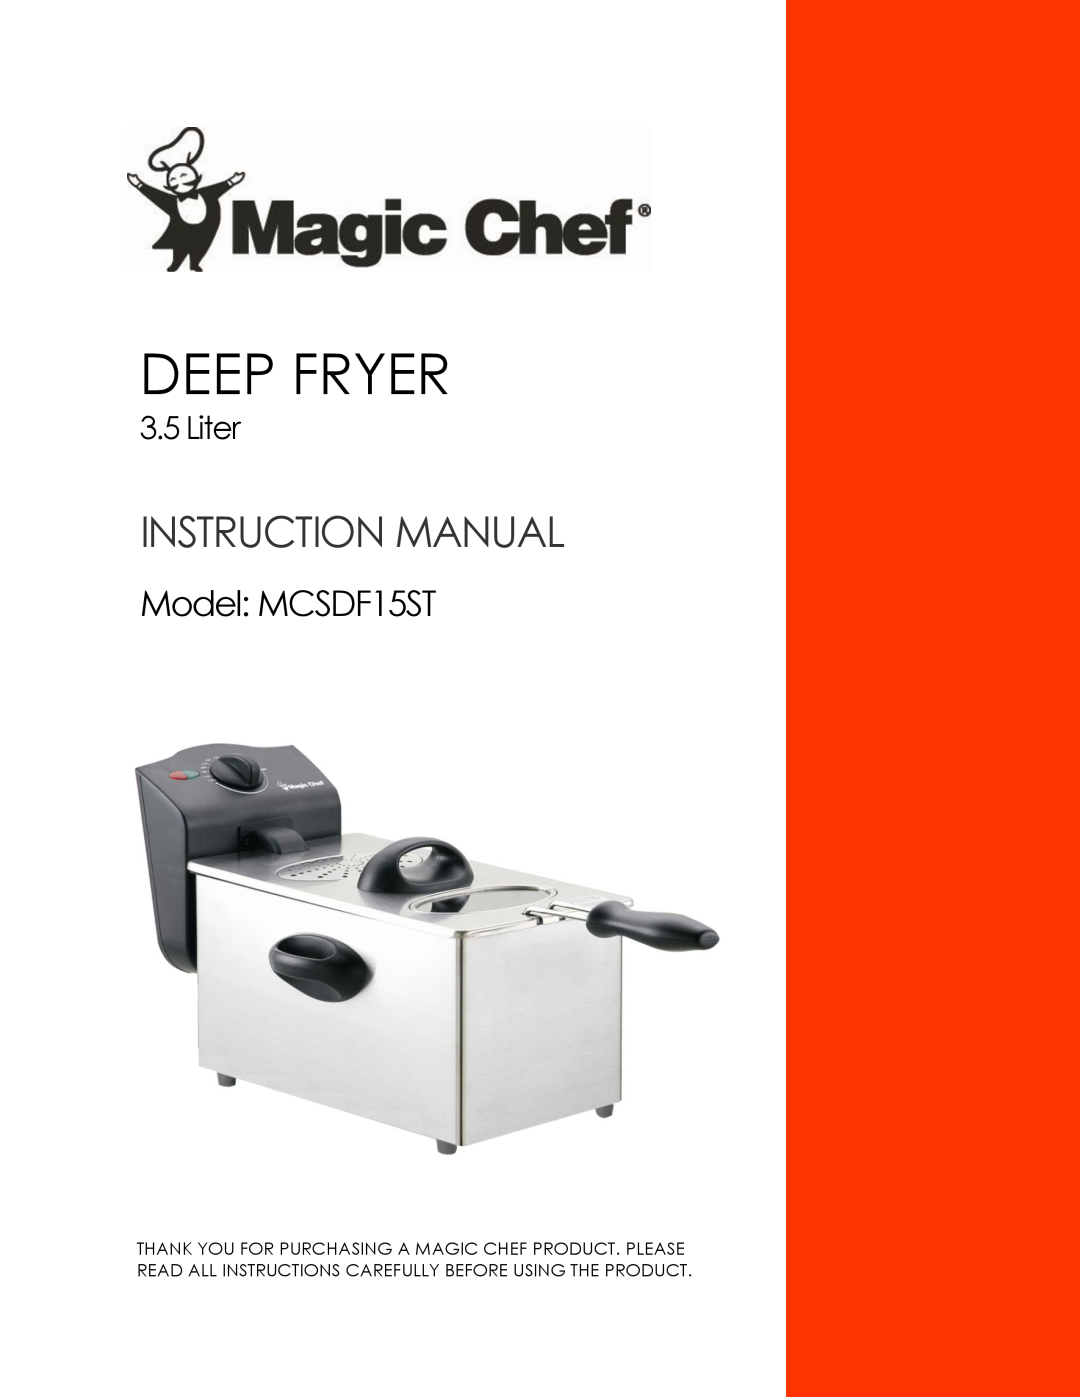 Magic Chef instruction manual Model MCSDF15ST, Deep Fryer, Liter 